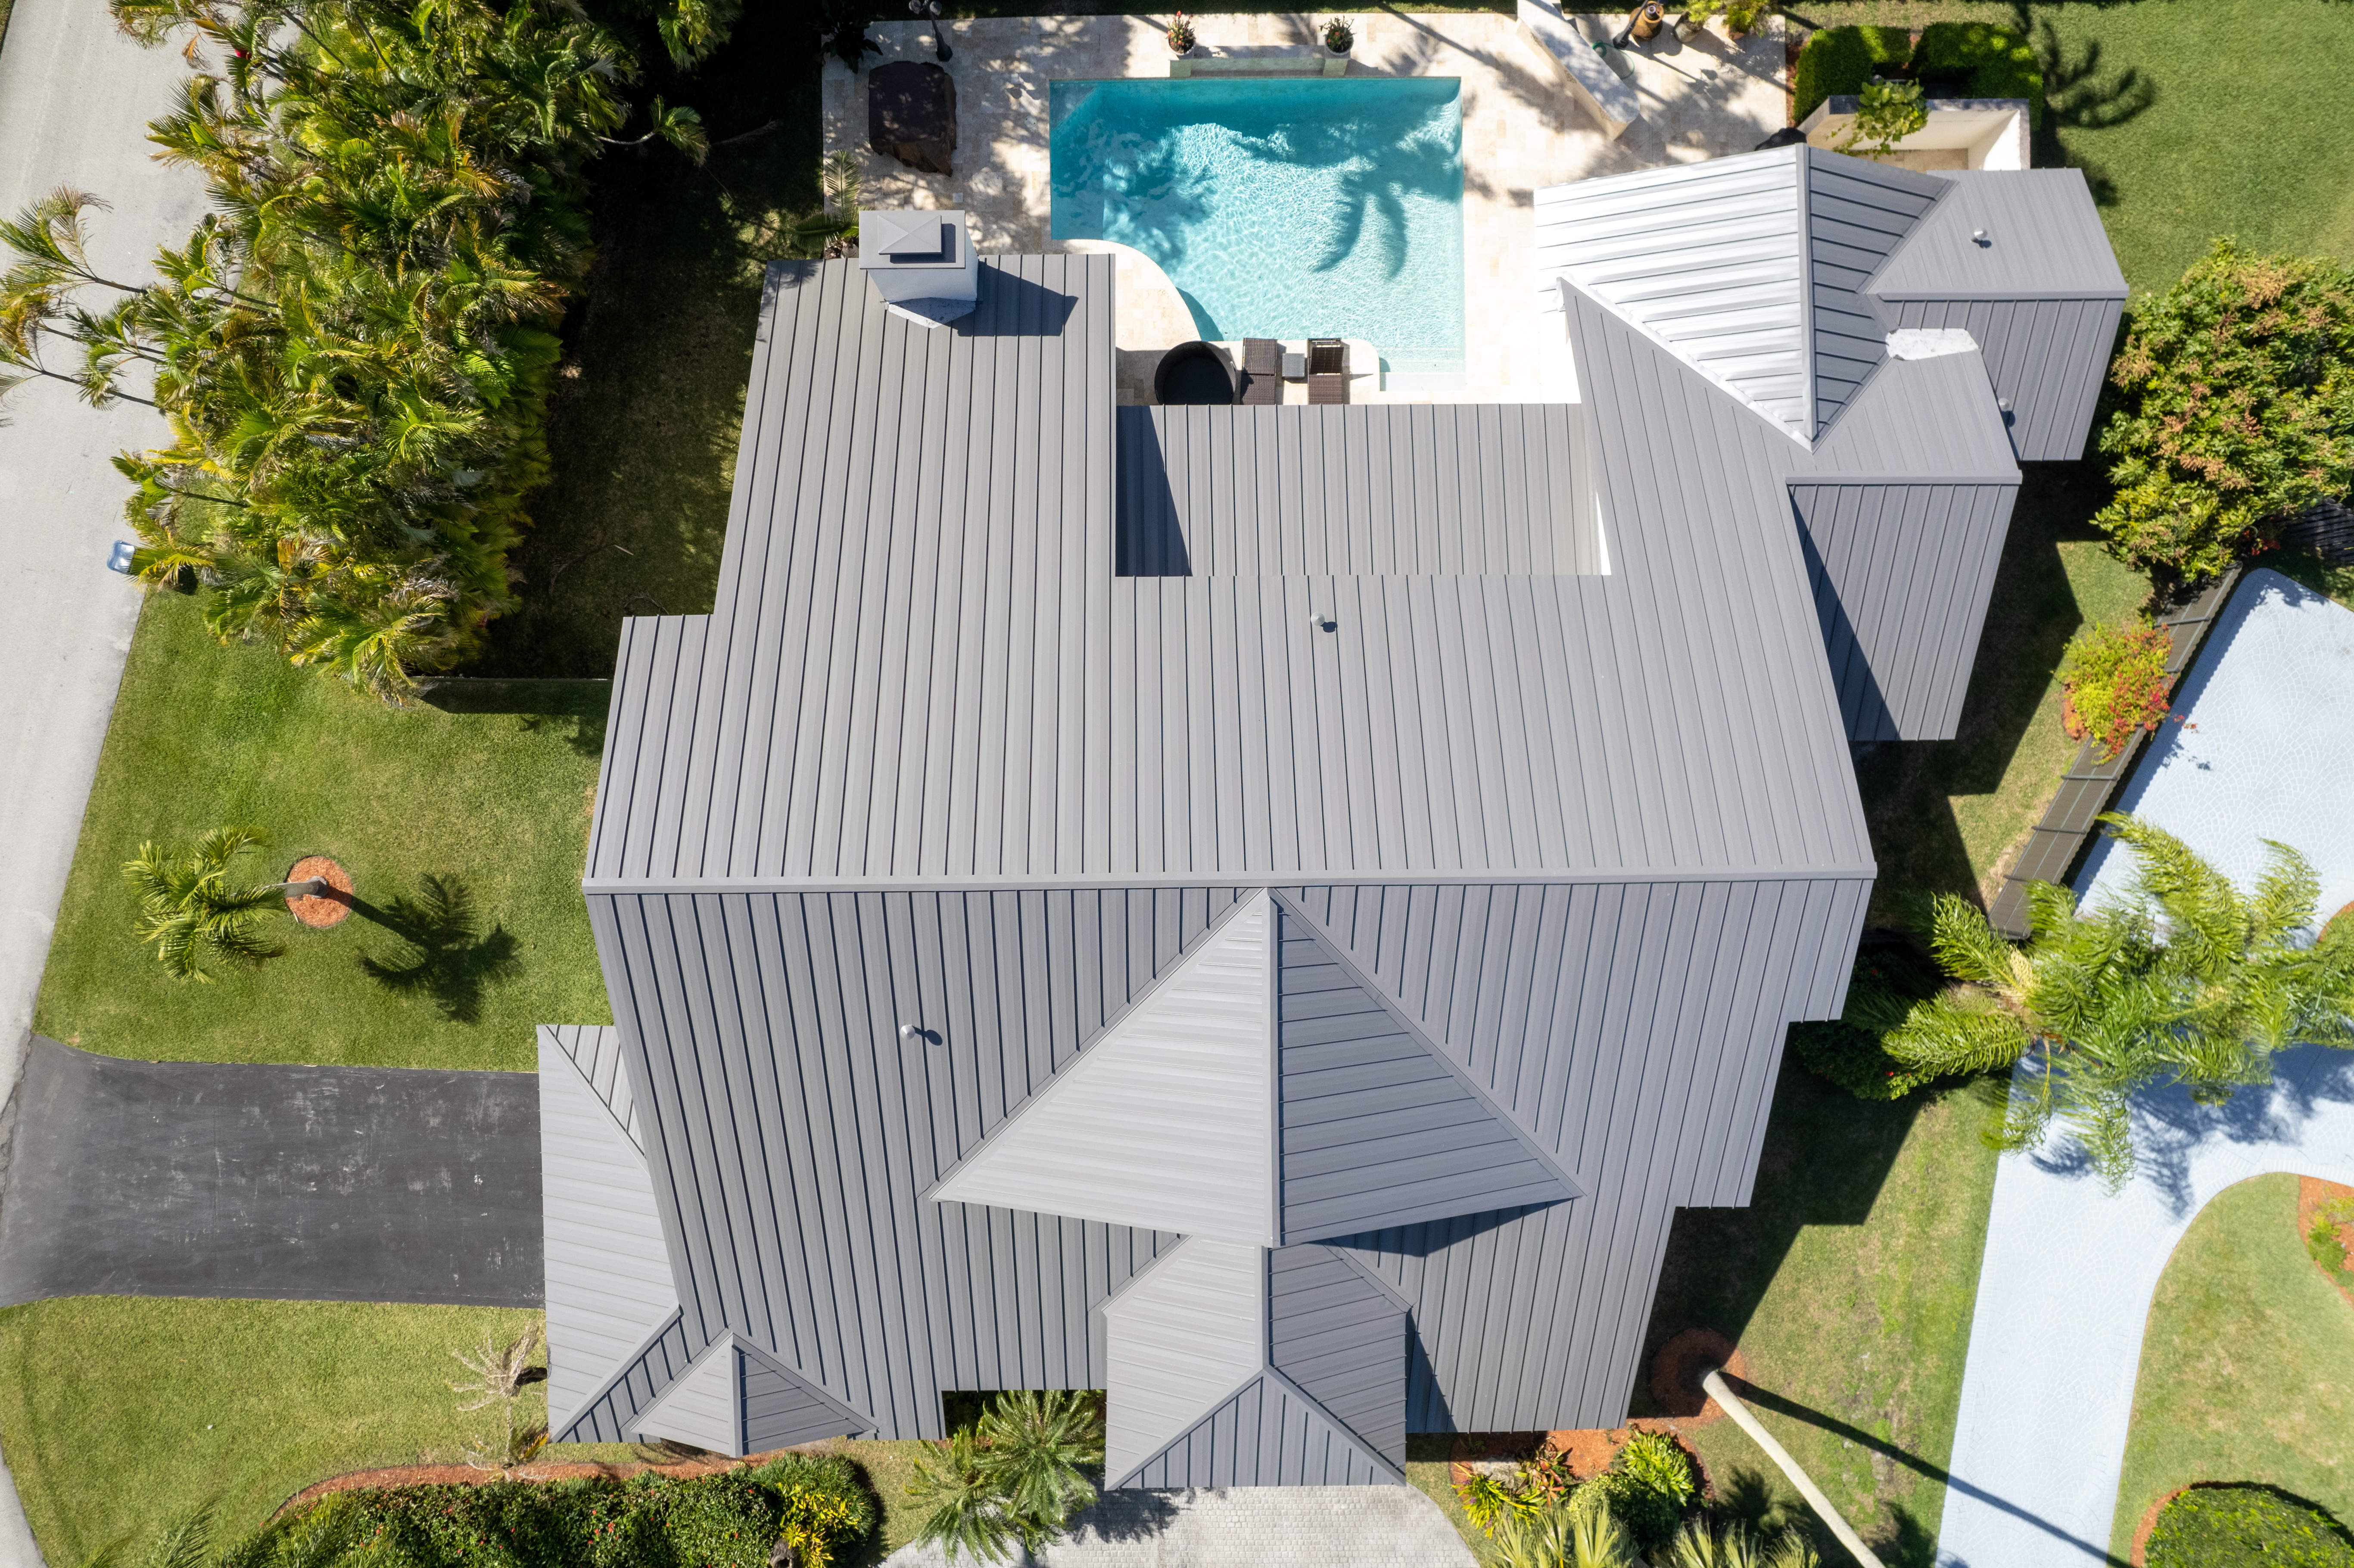 Istueta Roofing of Miami, Florida